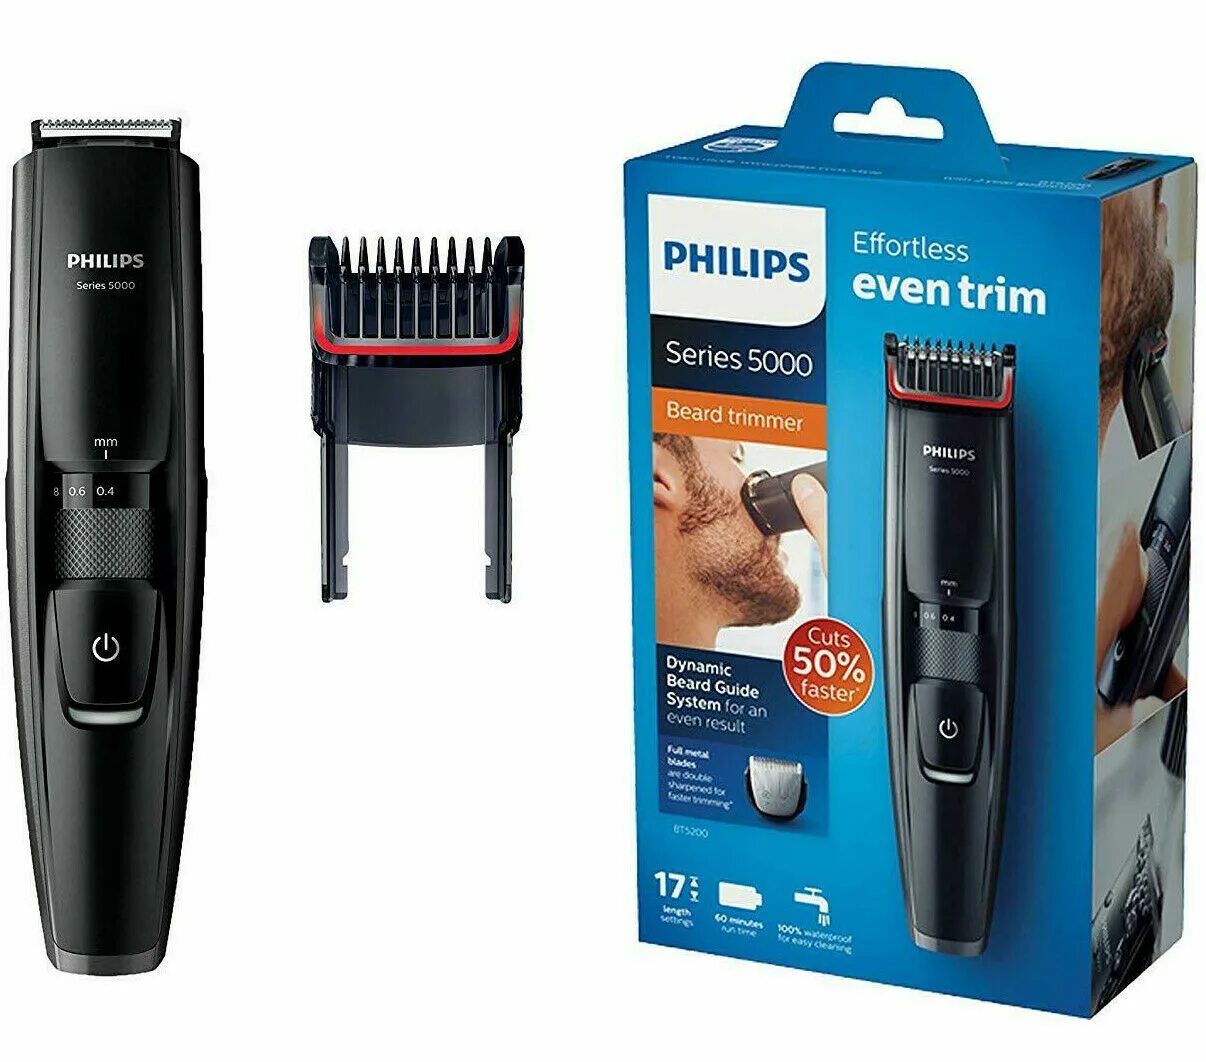 Philips bt5200. Триммер Philips bt5200. Philips Beard Trimmer 5000. Philips Series 5000 bt5200/16. Philips series 5000 цены